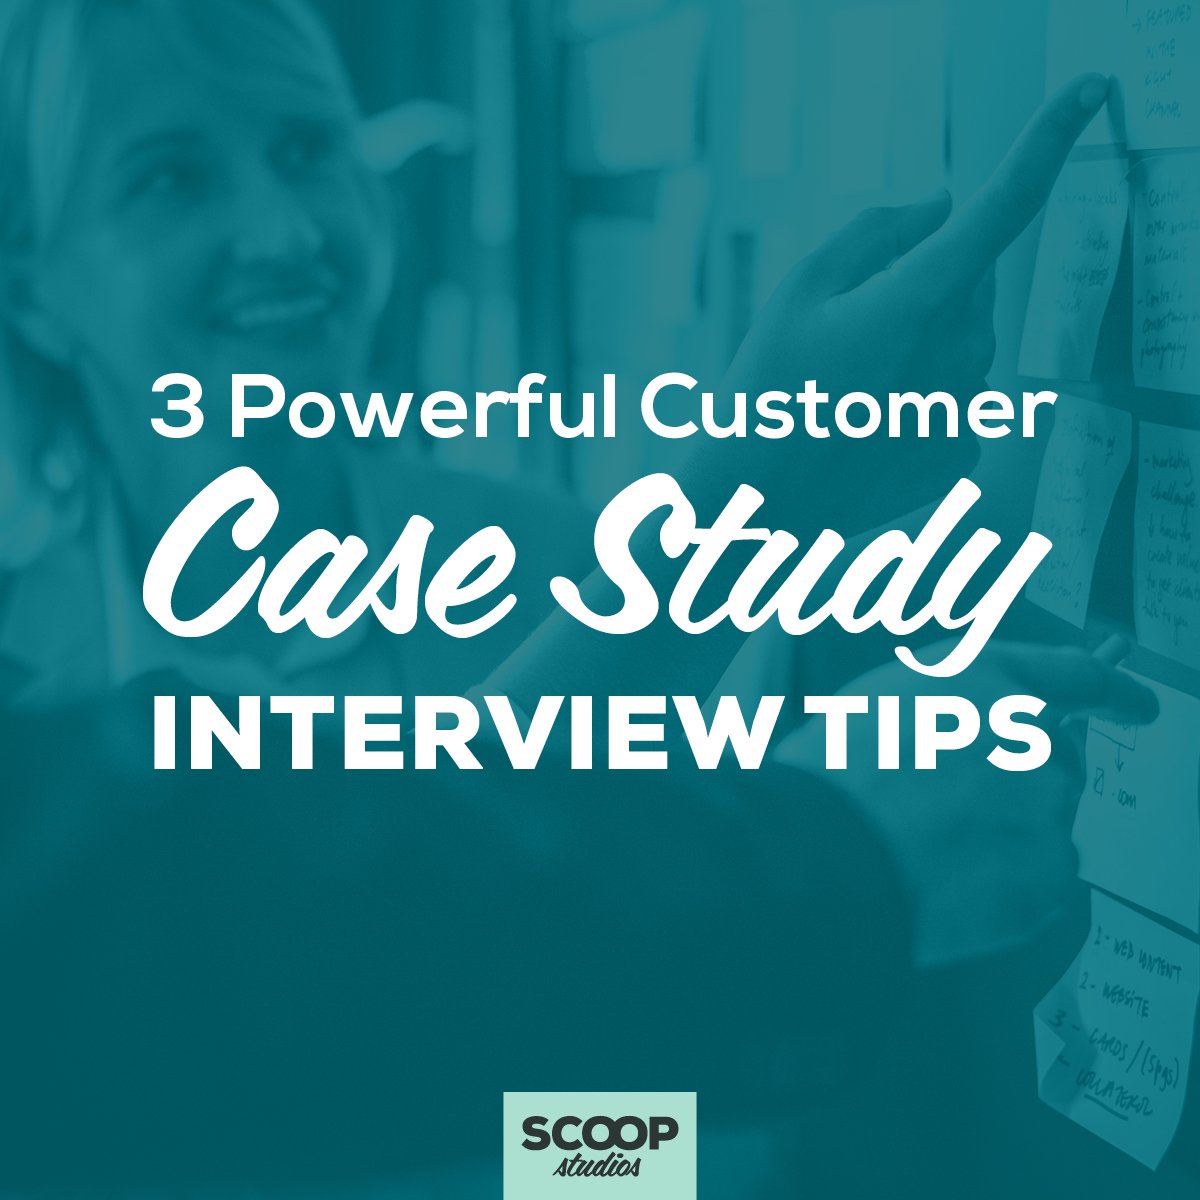 case study good customer service